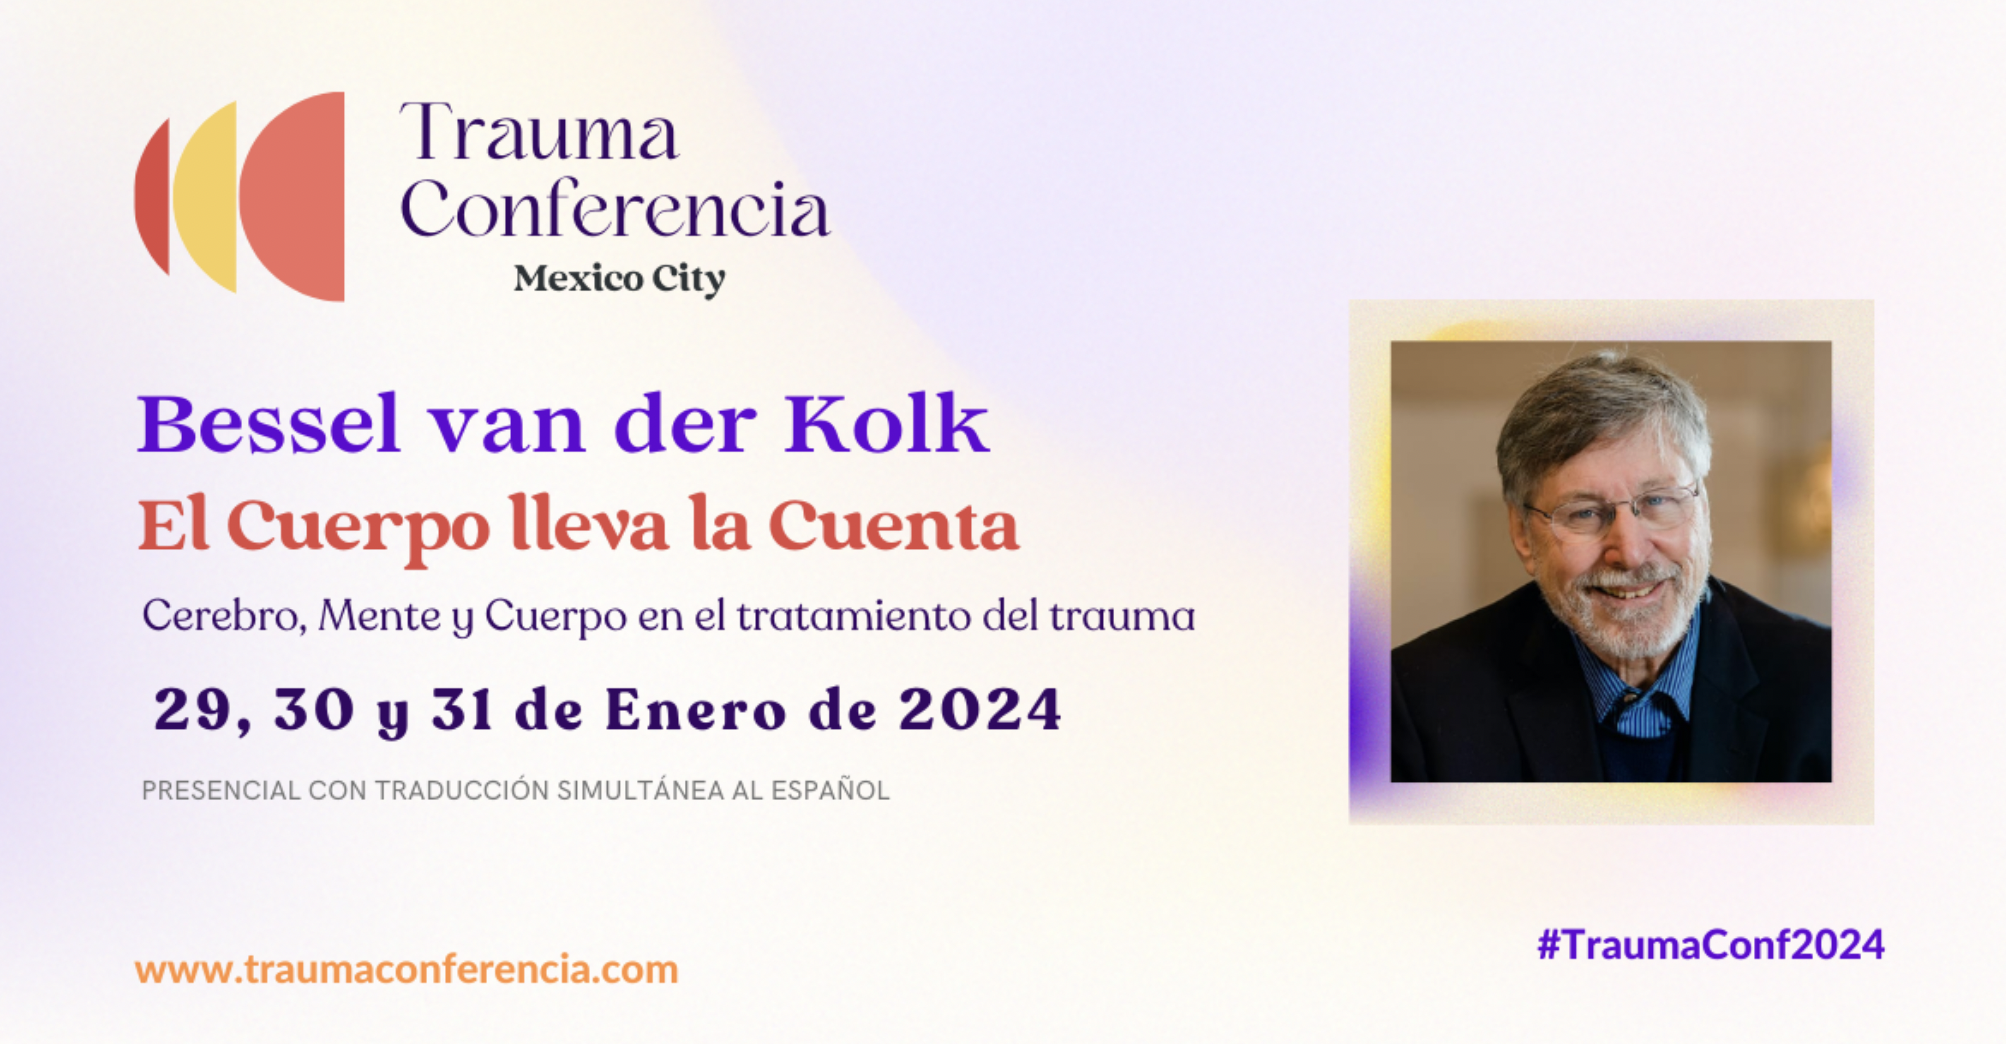 Trauma Conference 2024 Mexico City